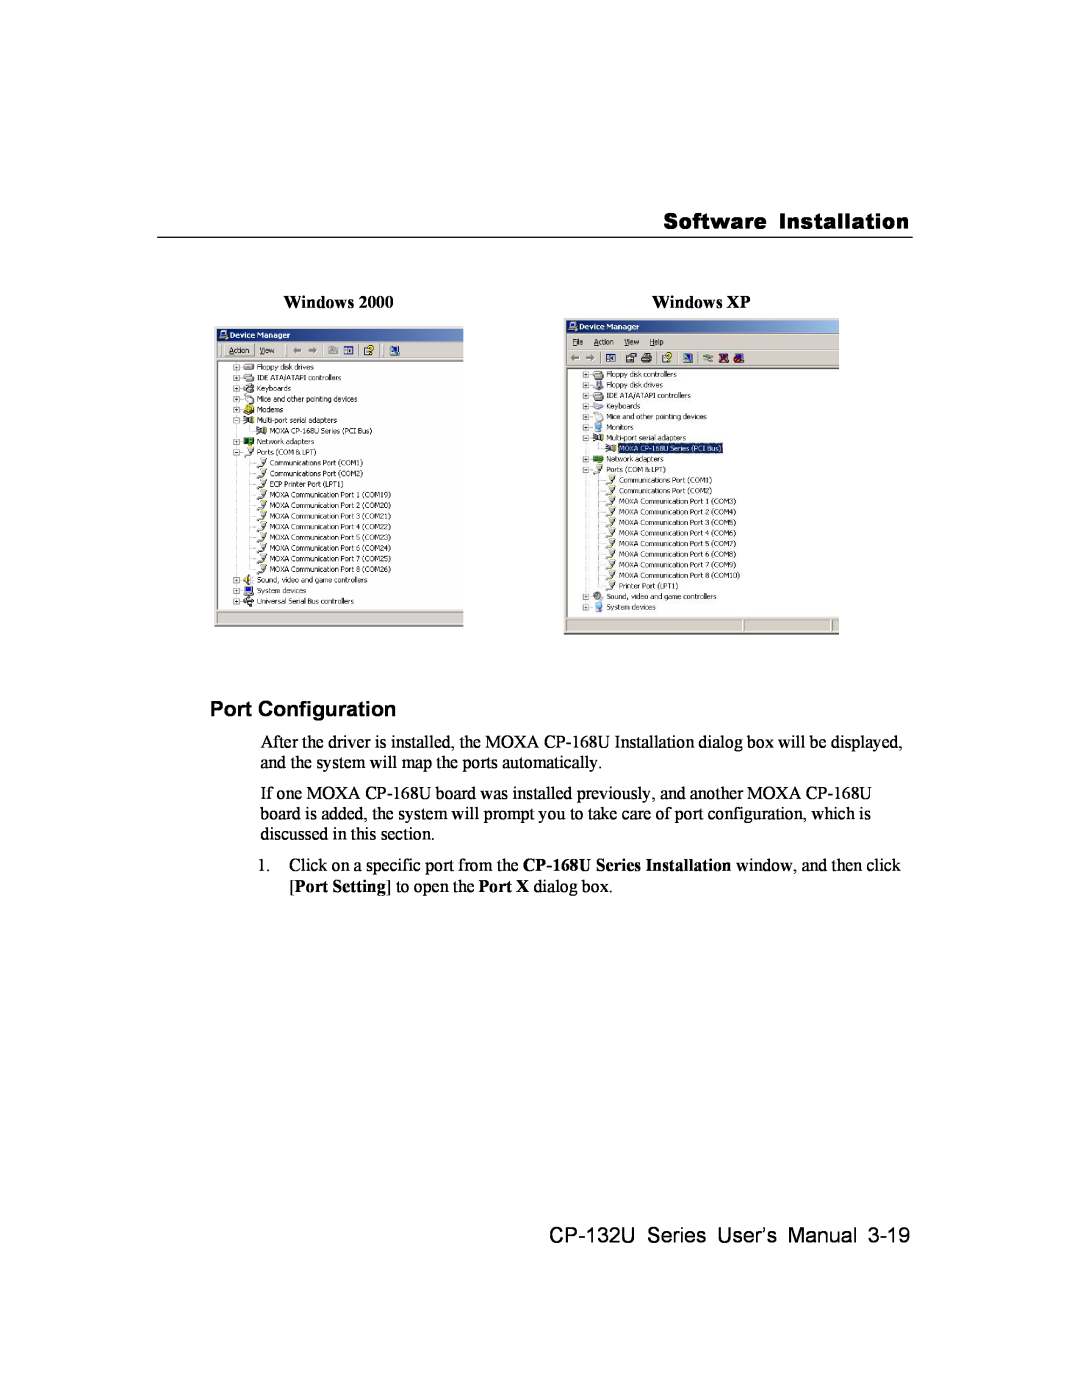 Moxa Technologies user manual Software Installation, Port Configuration, CP-132U Series User’s Manual, Windows XP 